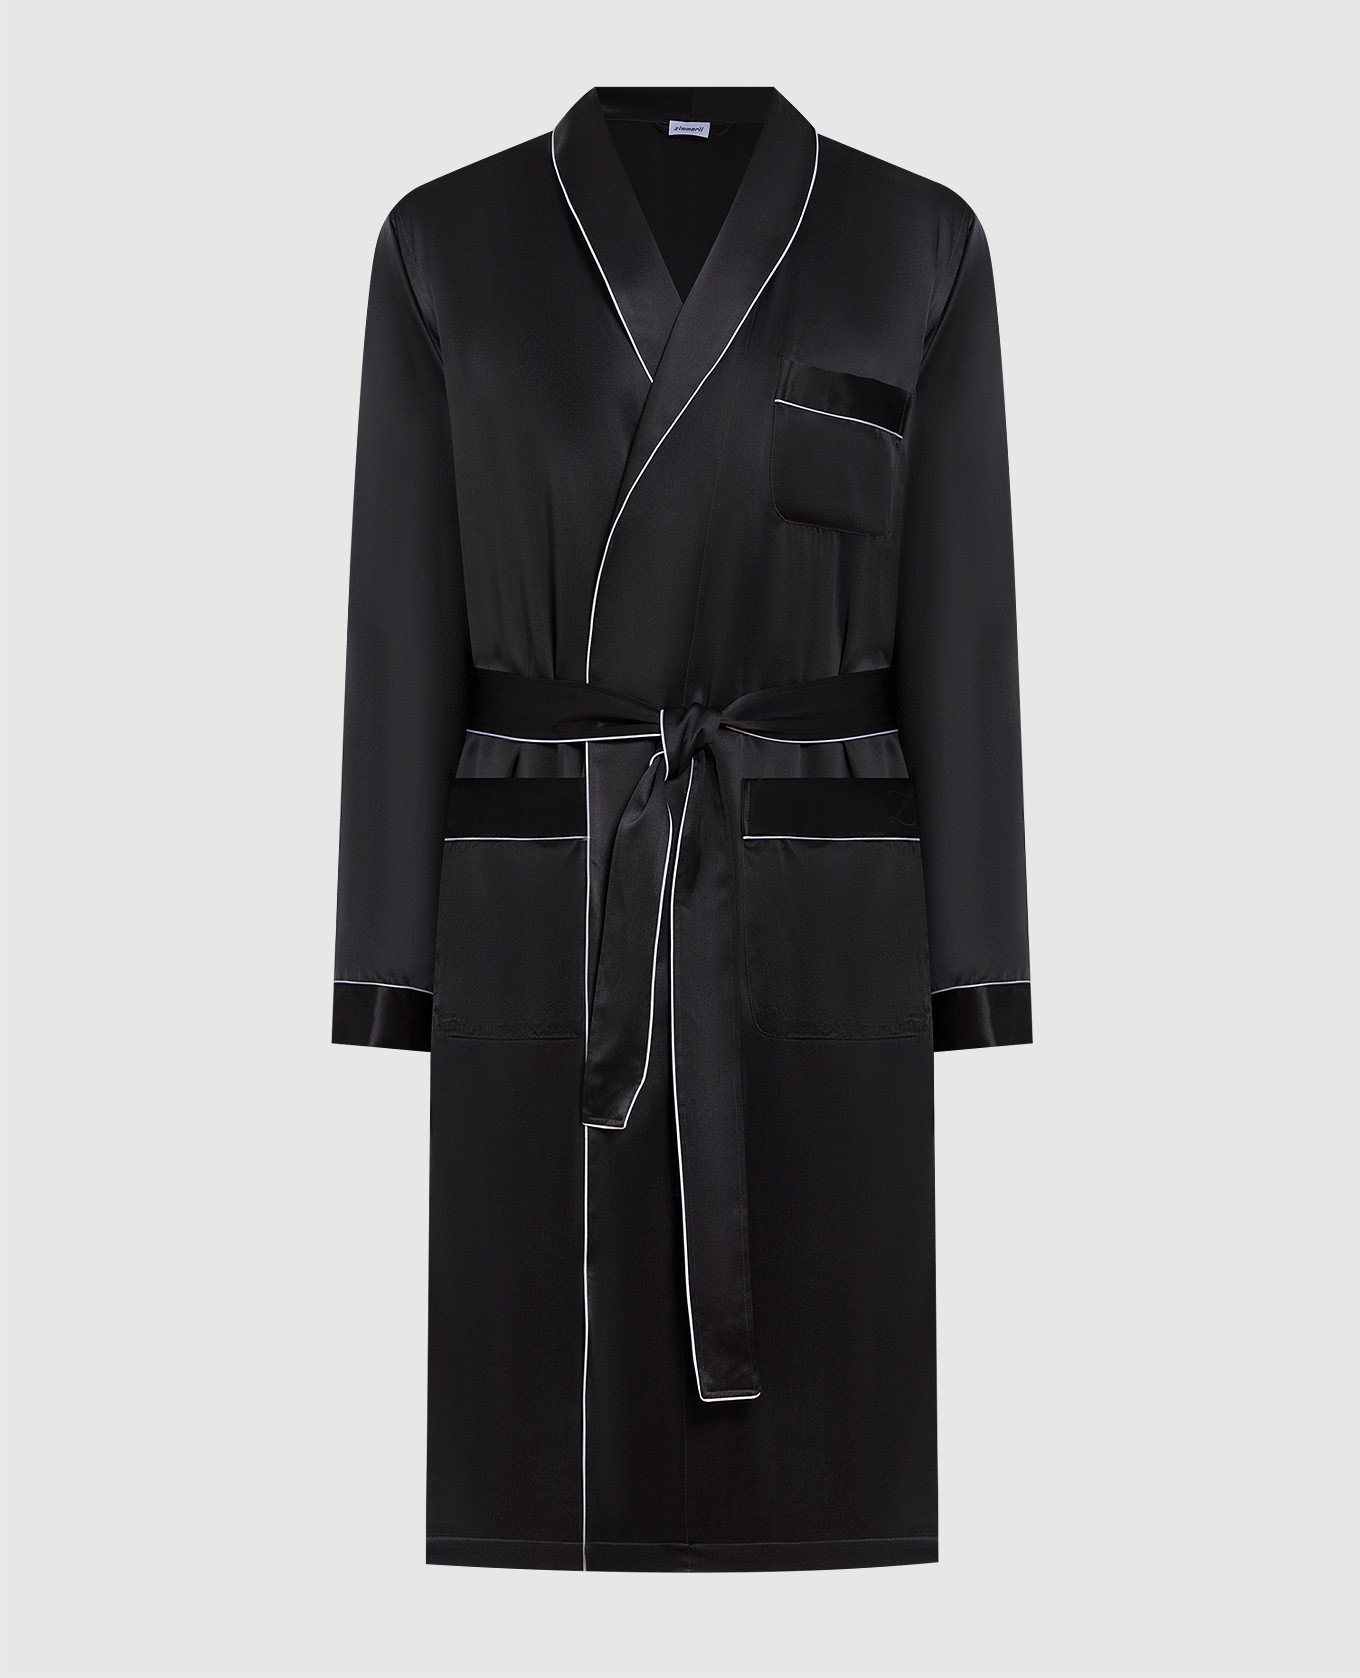 Black robe made of silk